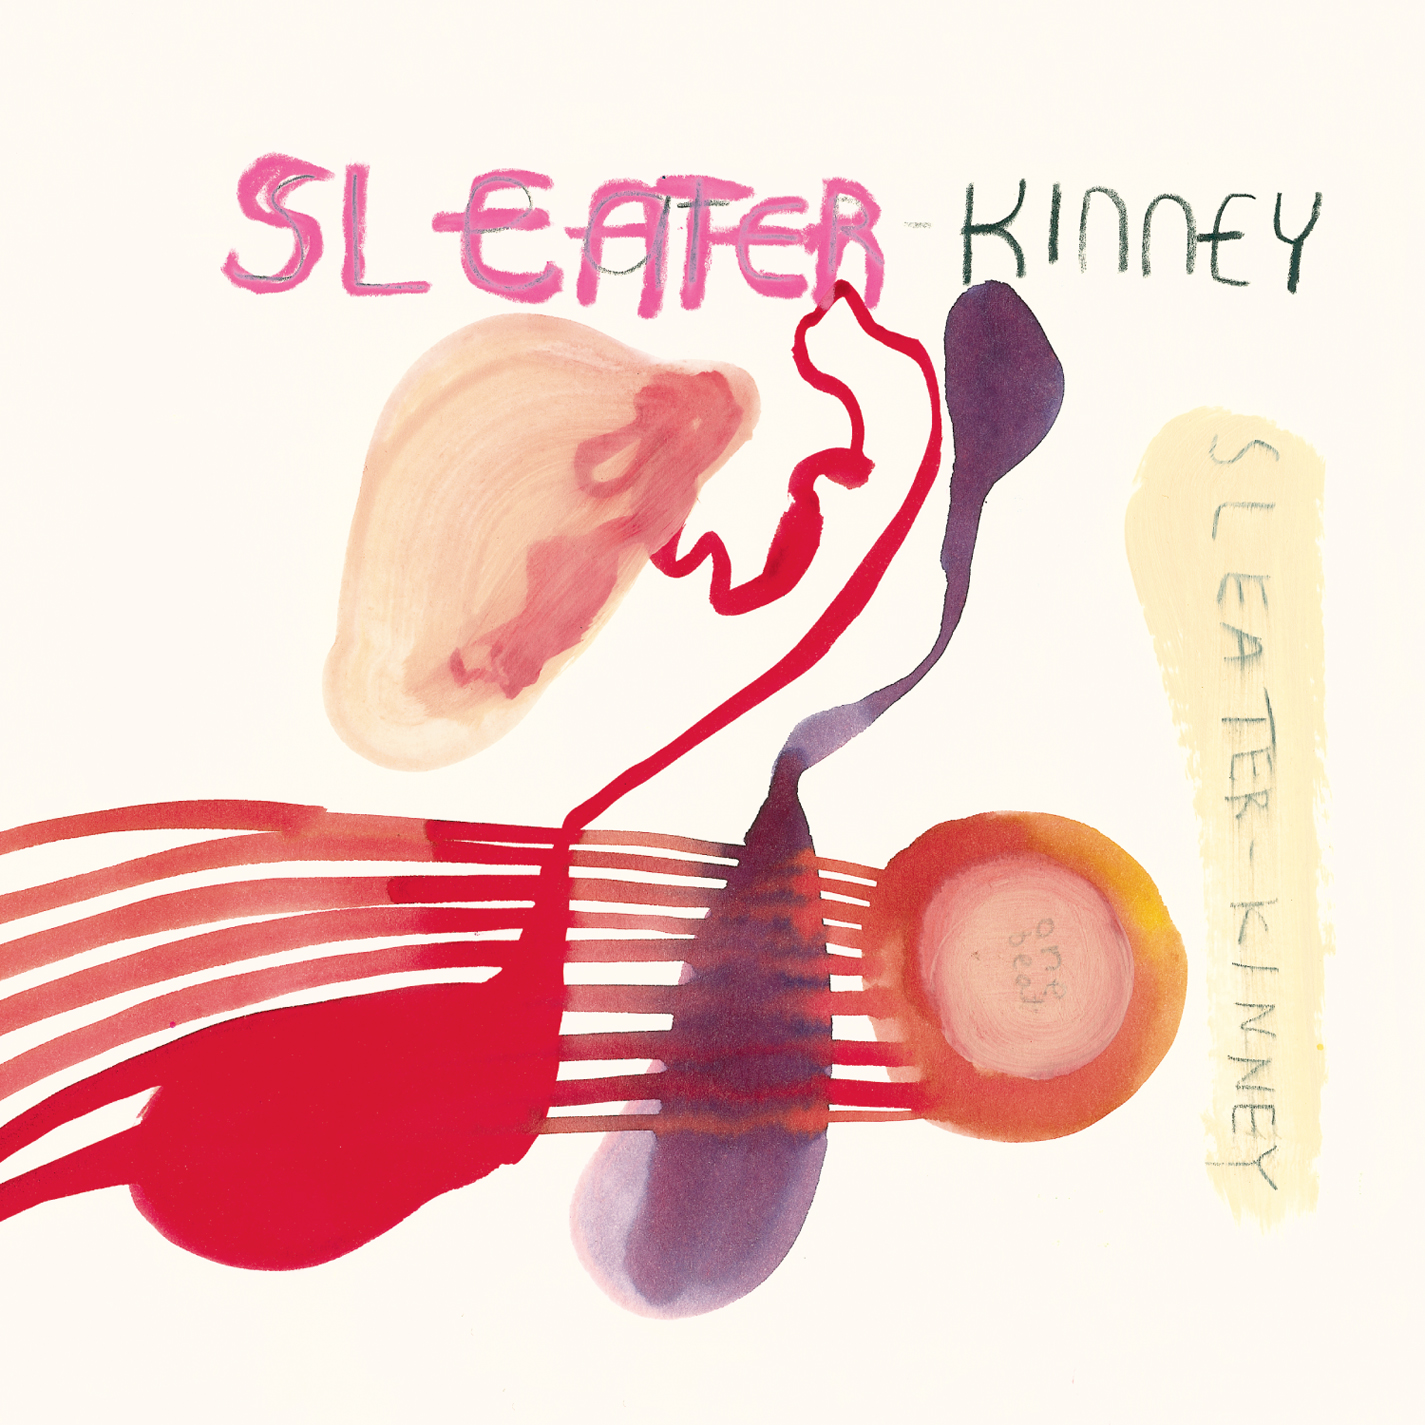 Sleater-Kinney - One Beat - CD